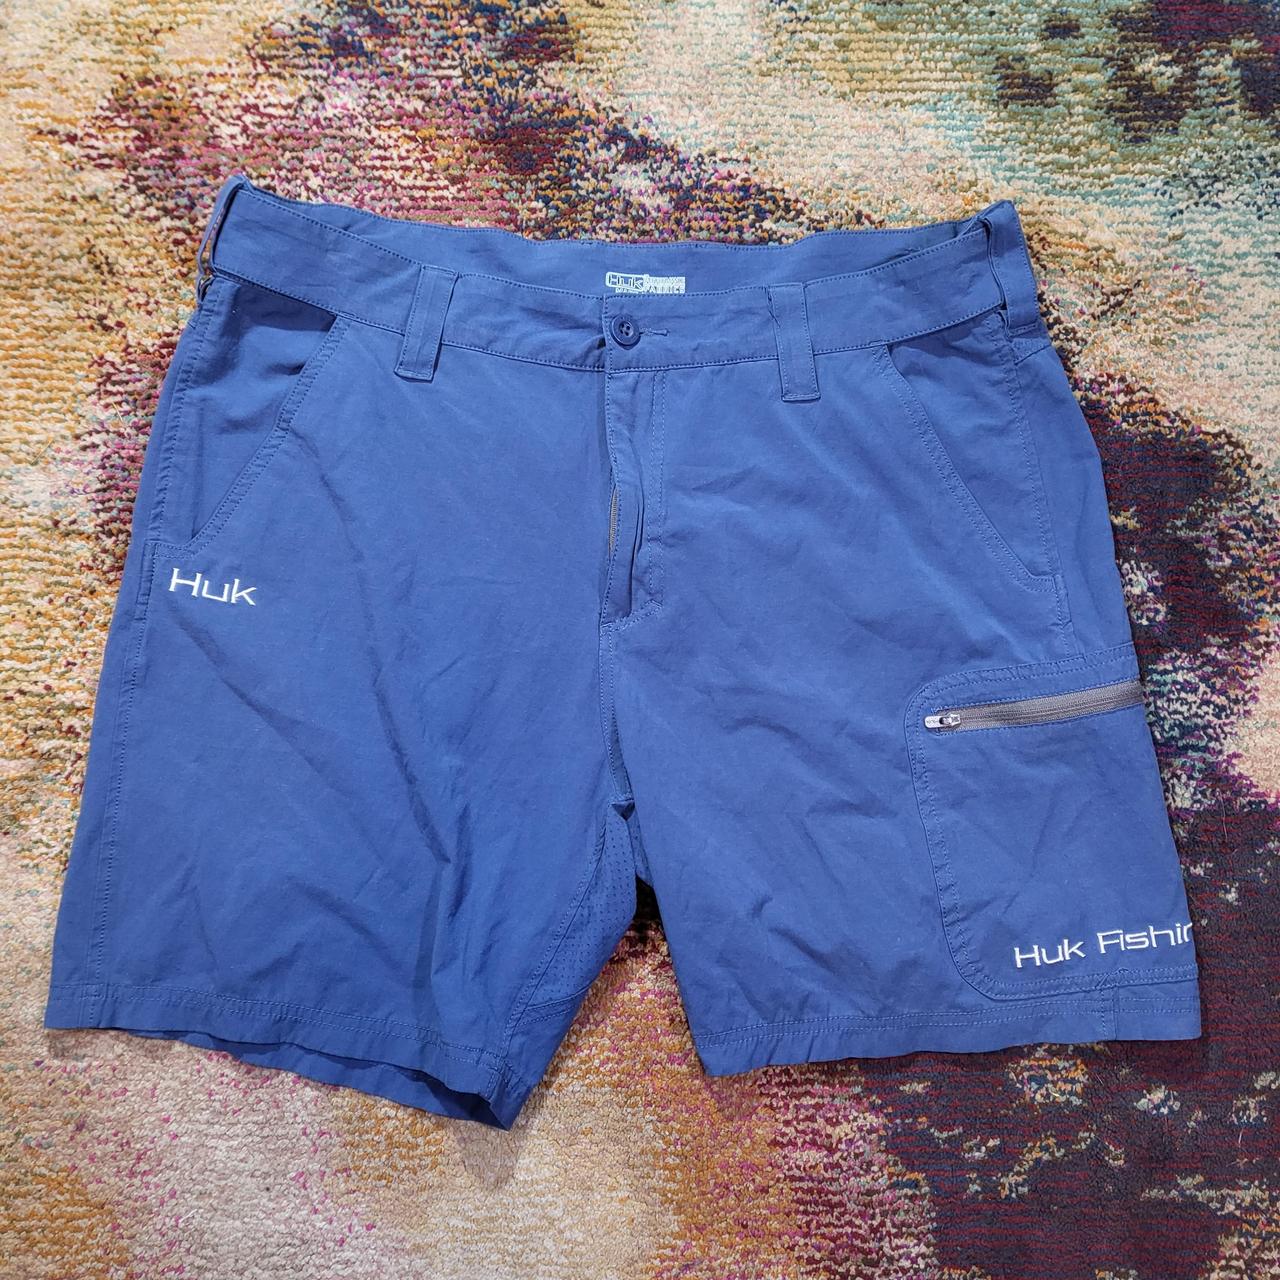 HUK Fishing Cargo shorts - size XL - inseam 7 - - Depop